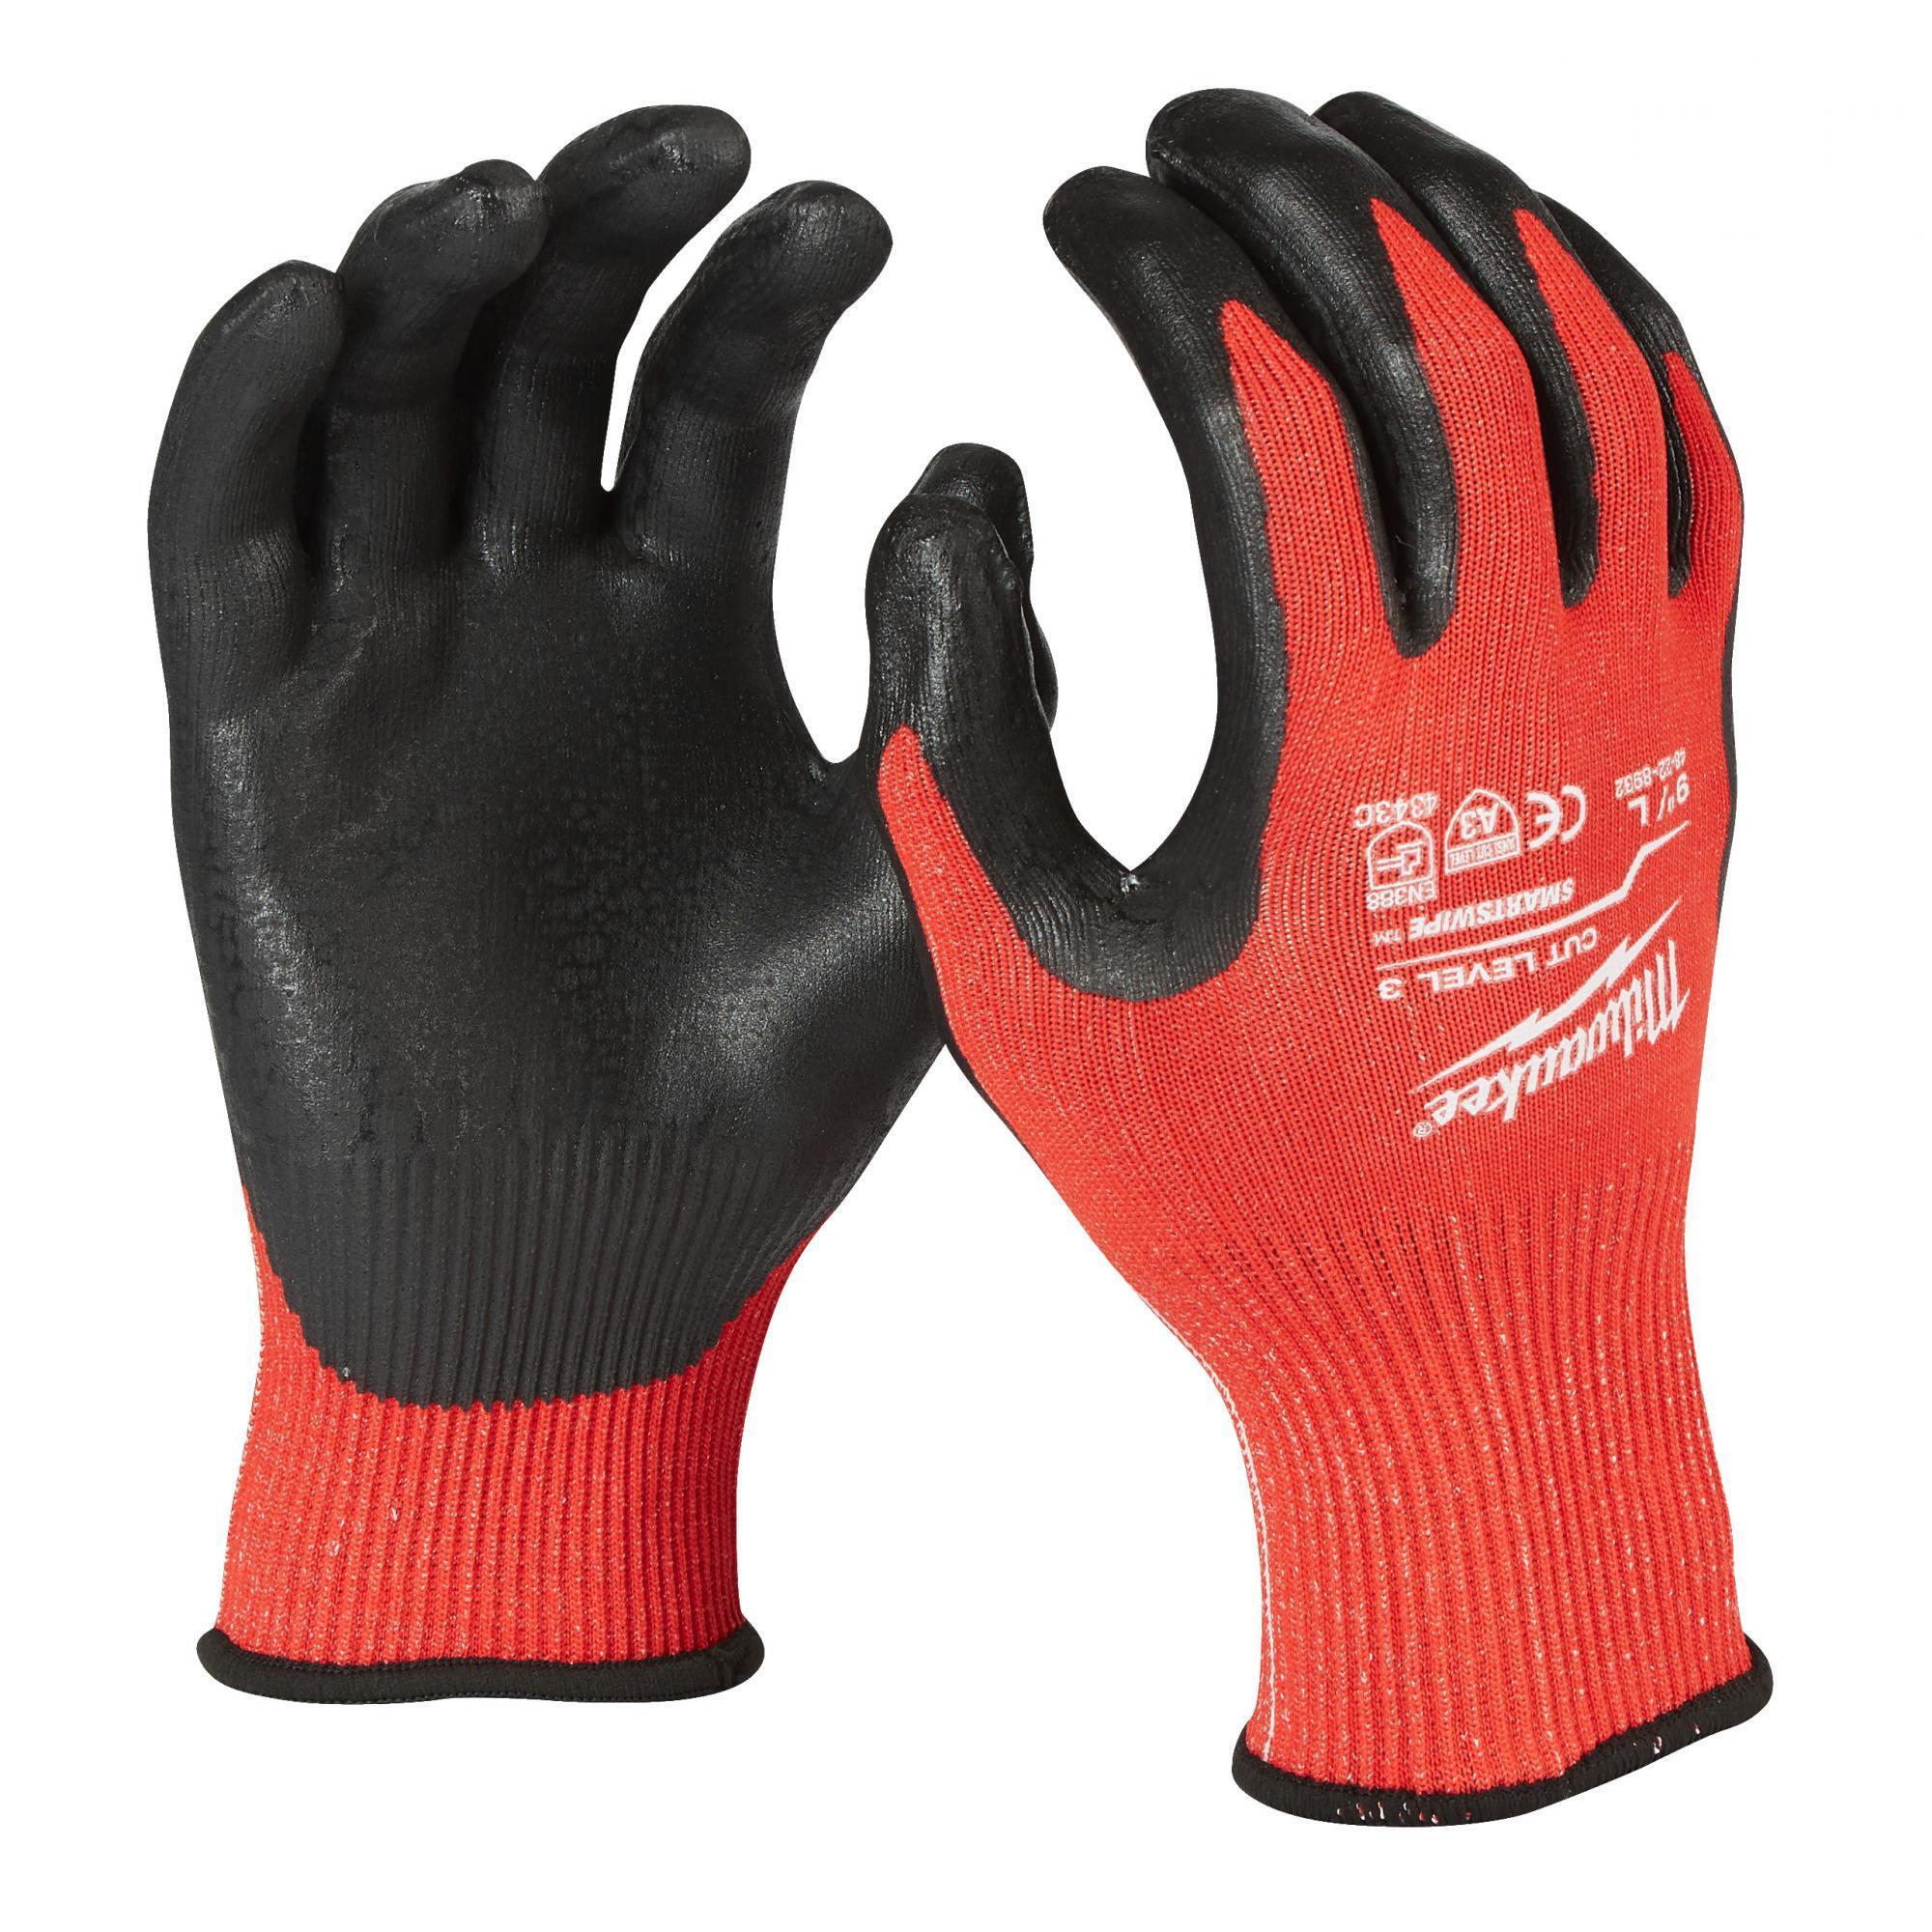 Перчатки защитные Milwaukee Cut Level 3/C, размер L/9, 4932471619, 1 пара сигнальные перчатки milwaukee